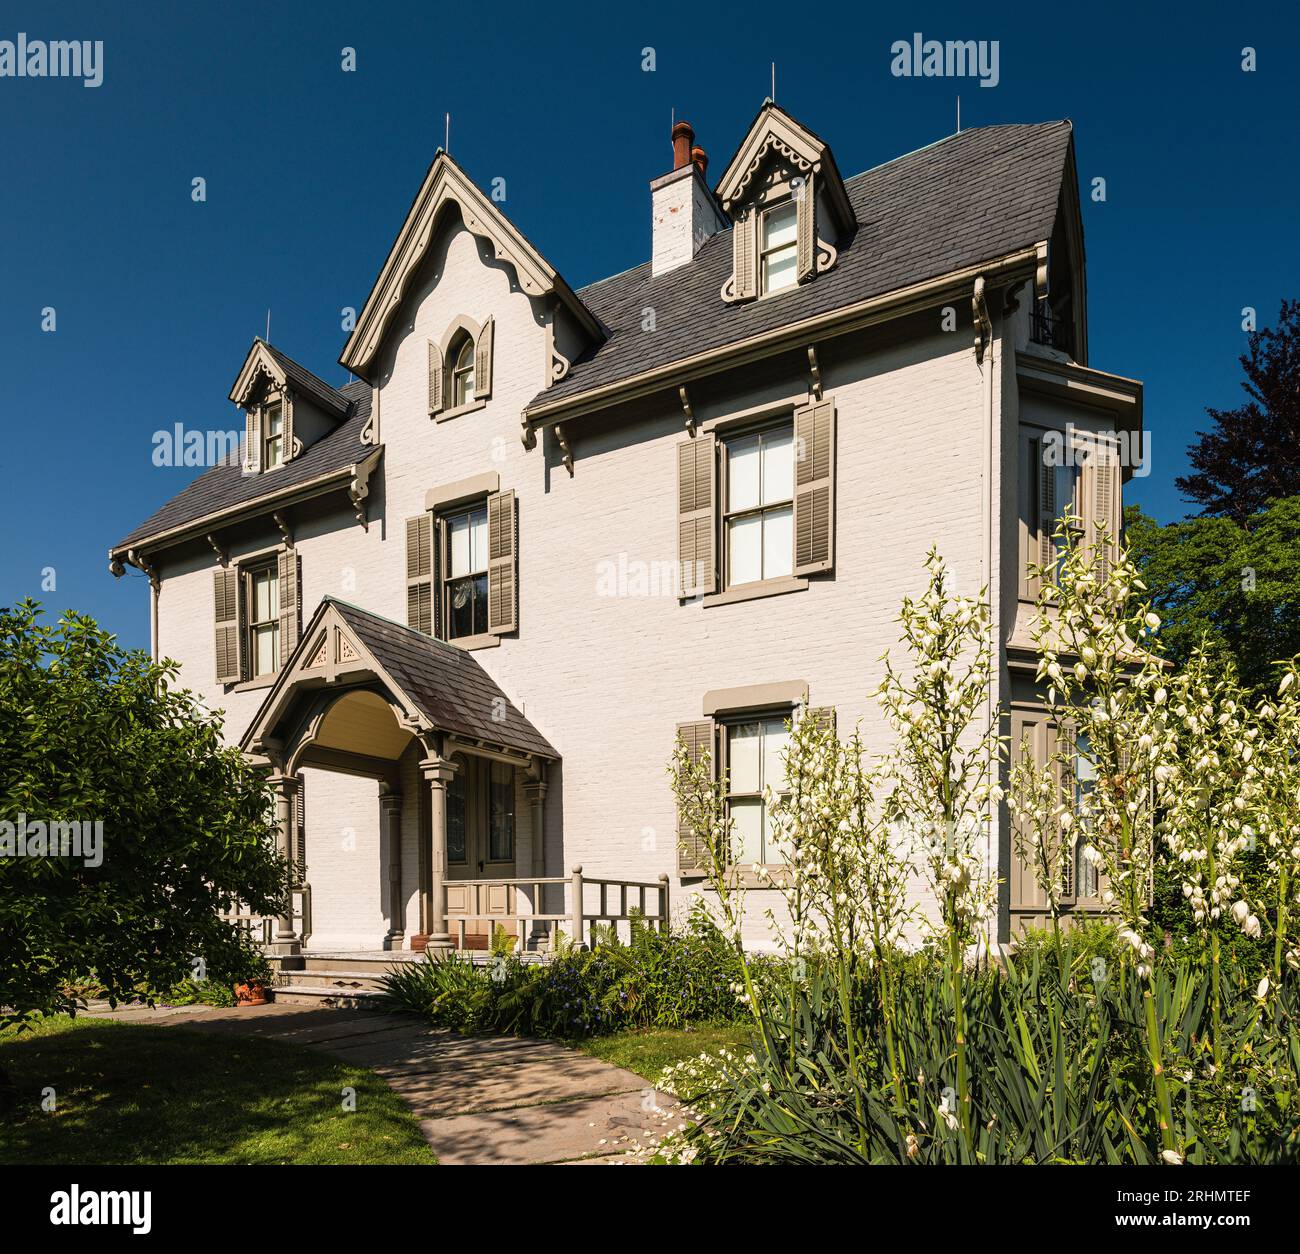 Harriet Beecher Stowe House   Hartford, Connecticut, USA Stock Photo